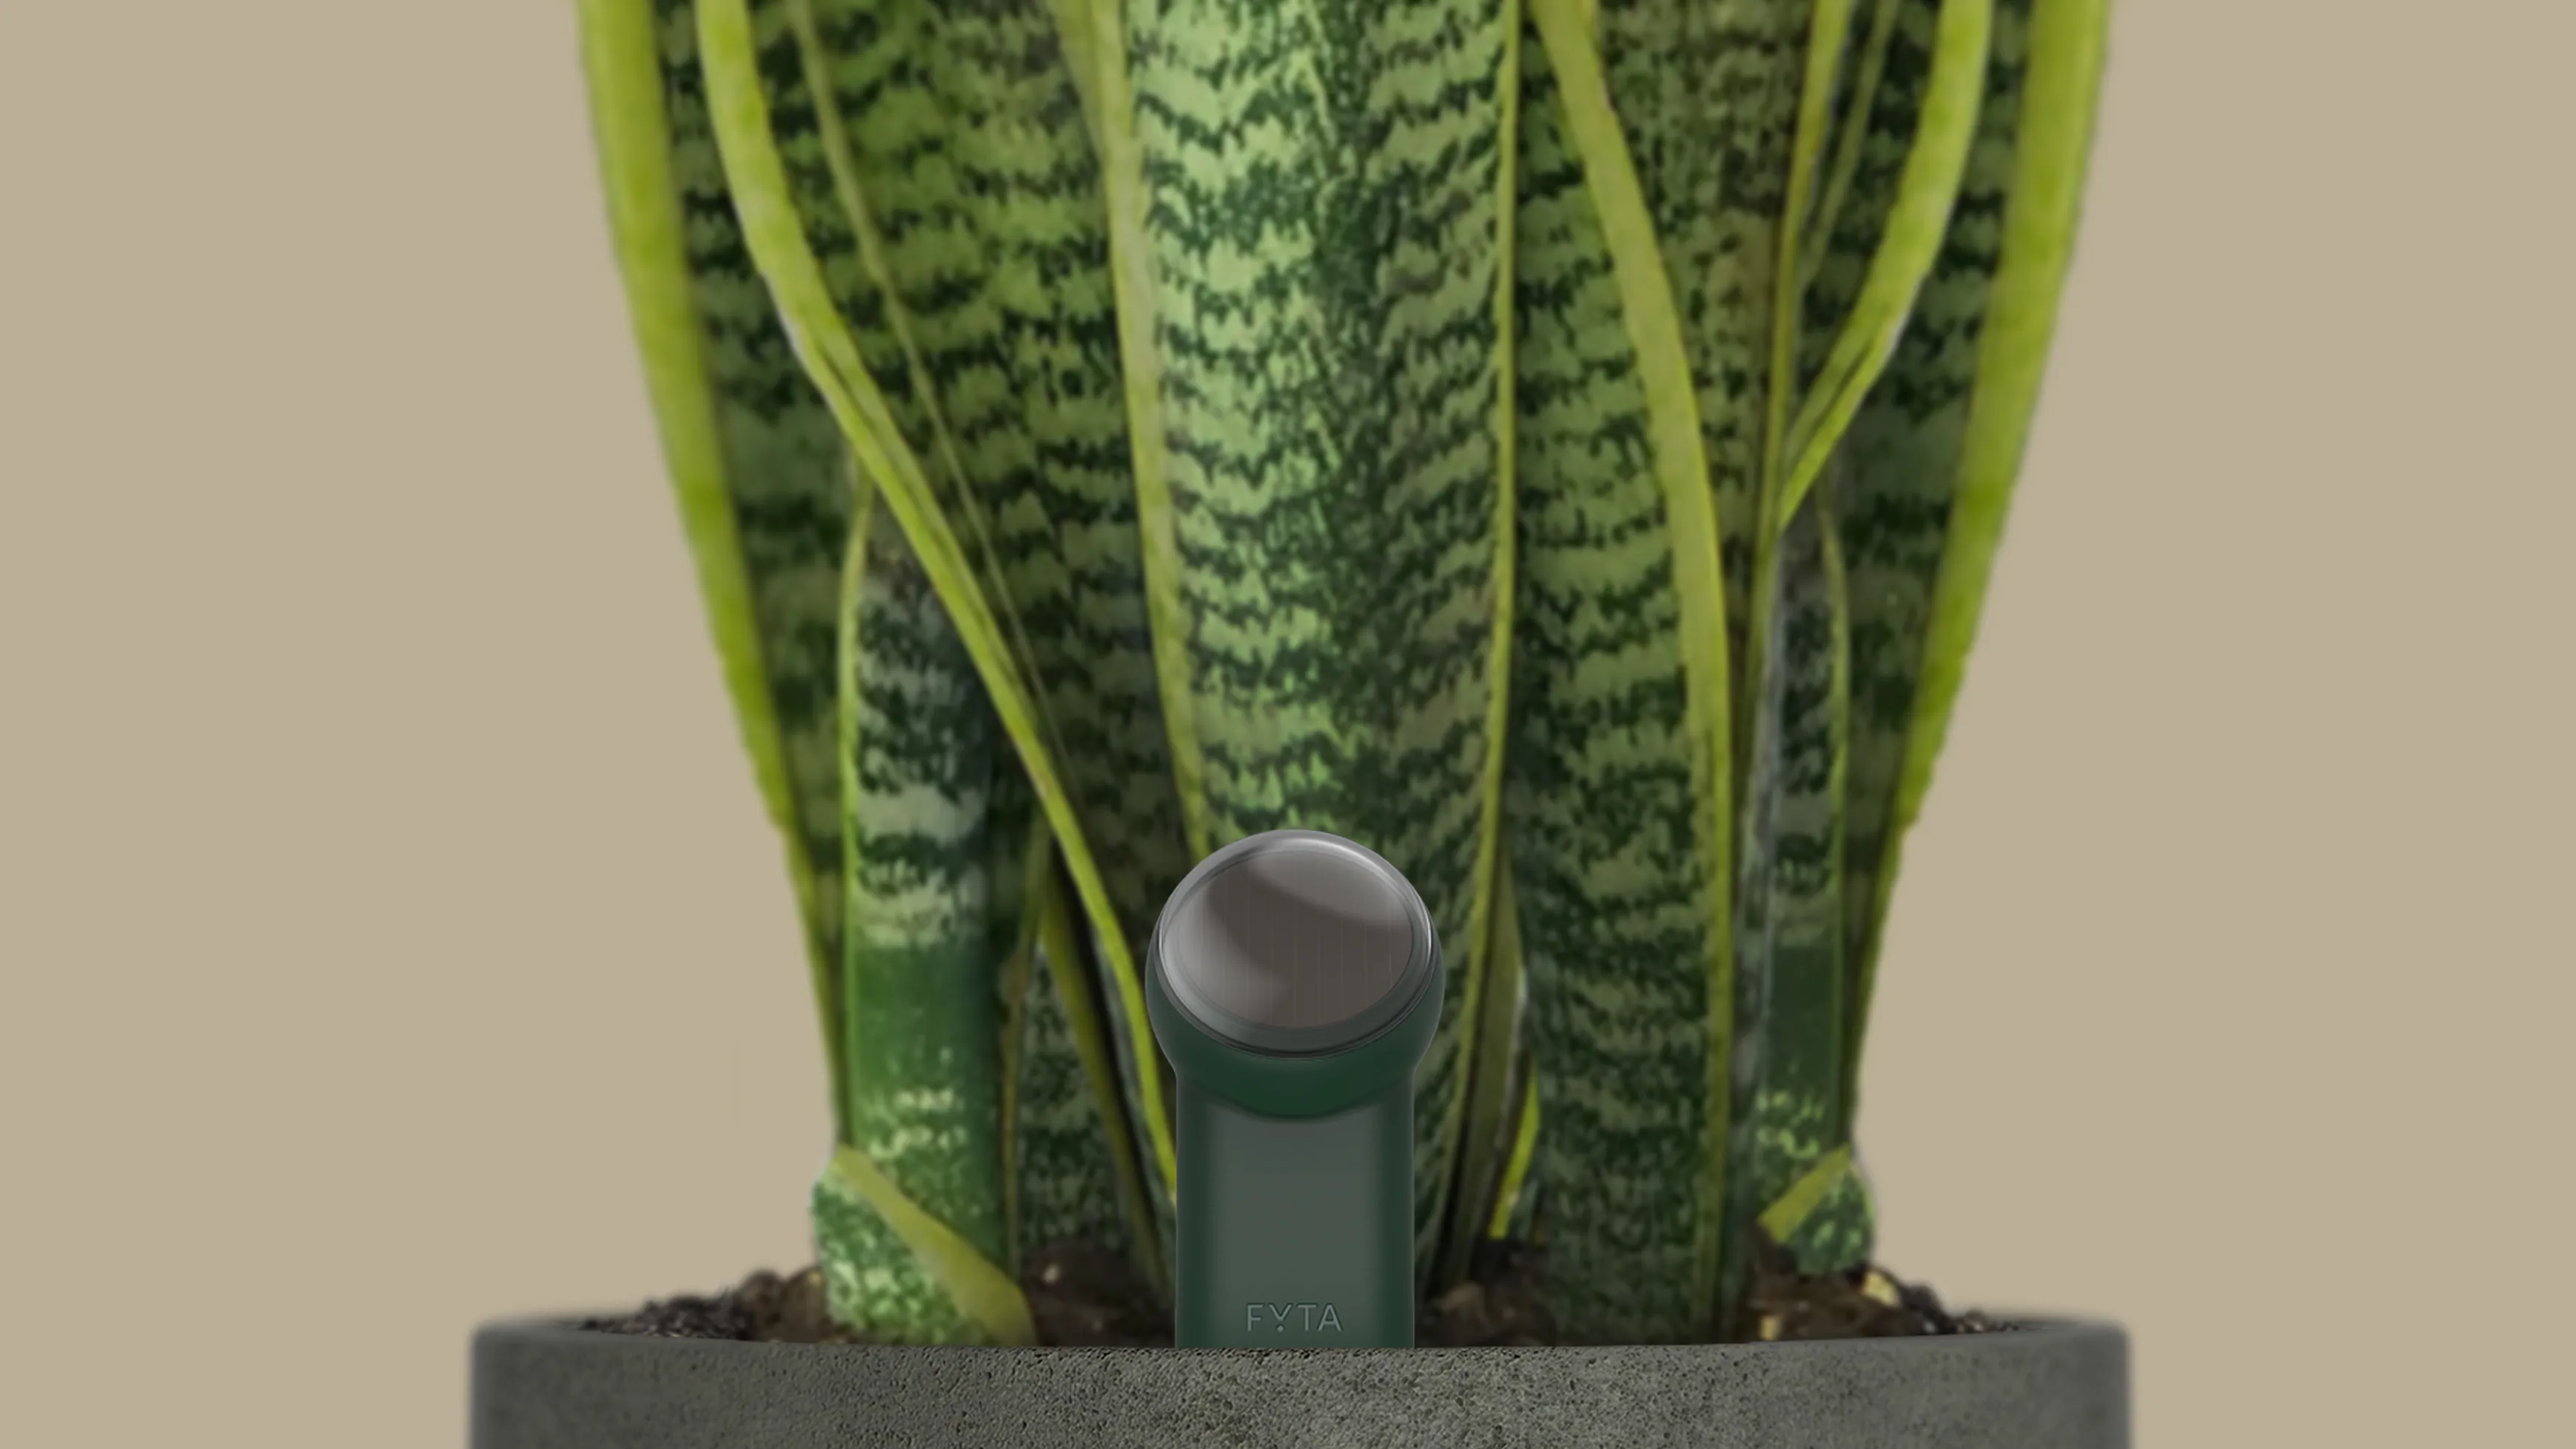 A Fyta smart plant sensor almost hidden in the vegetation of a potted plant